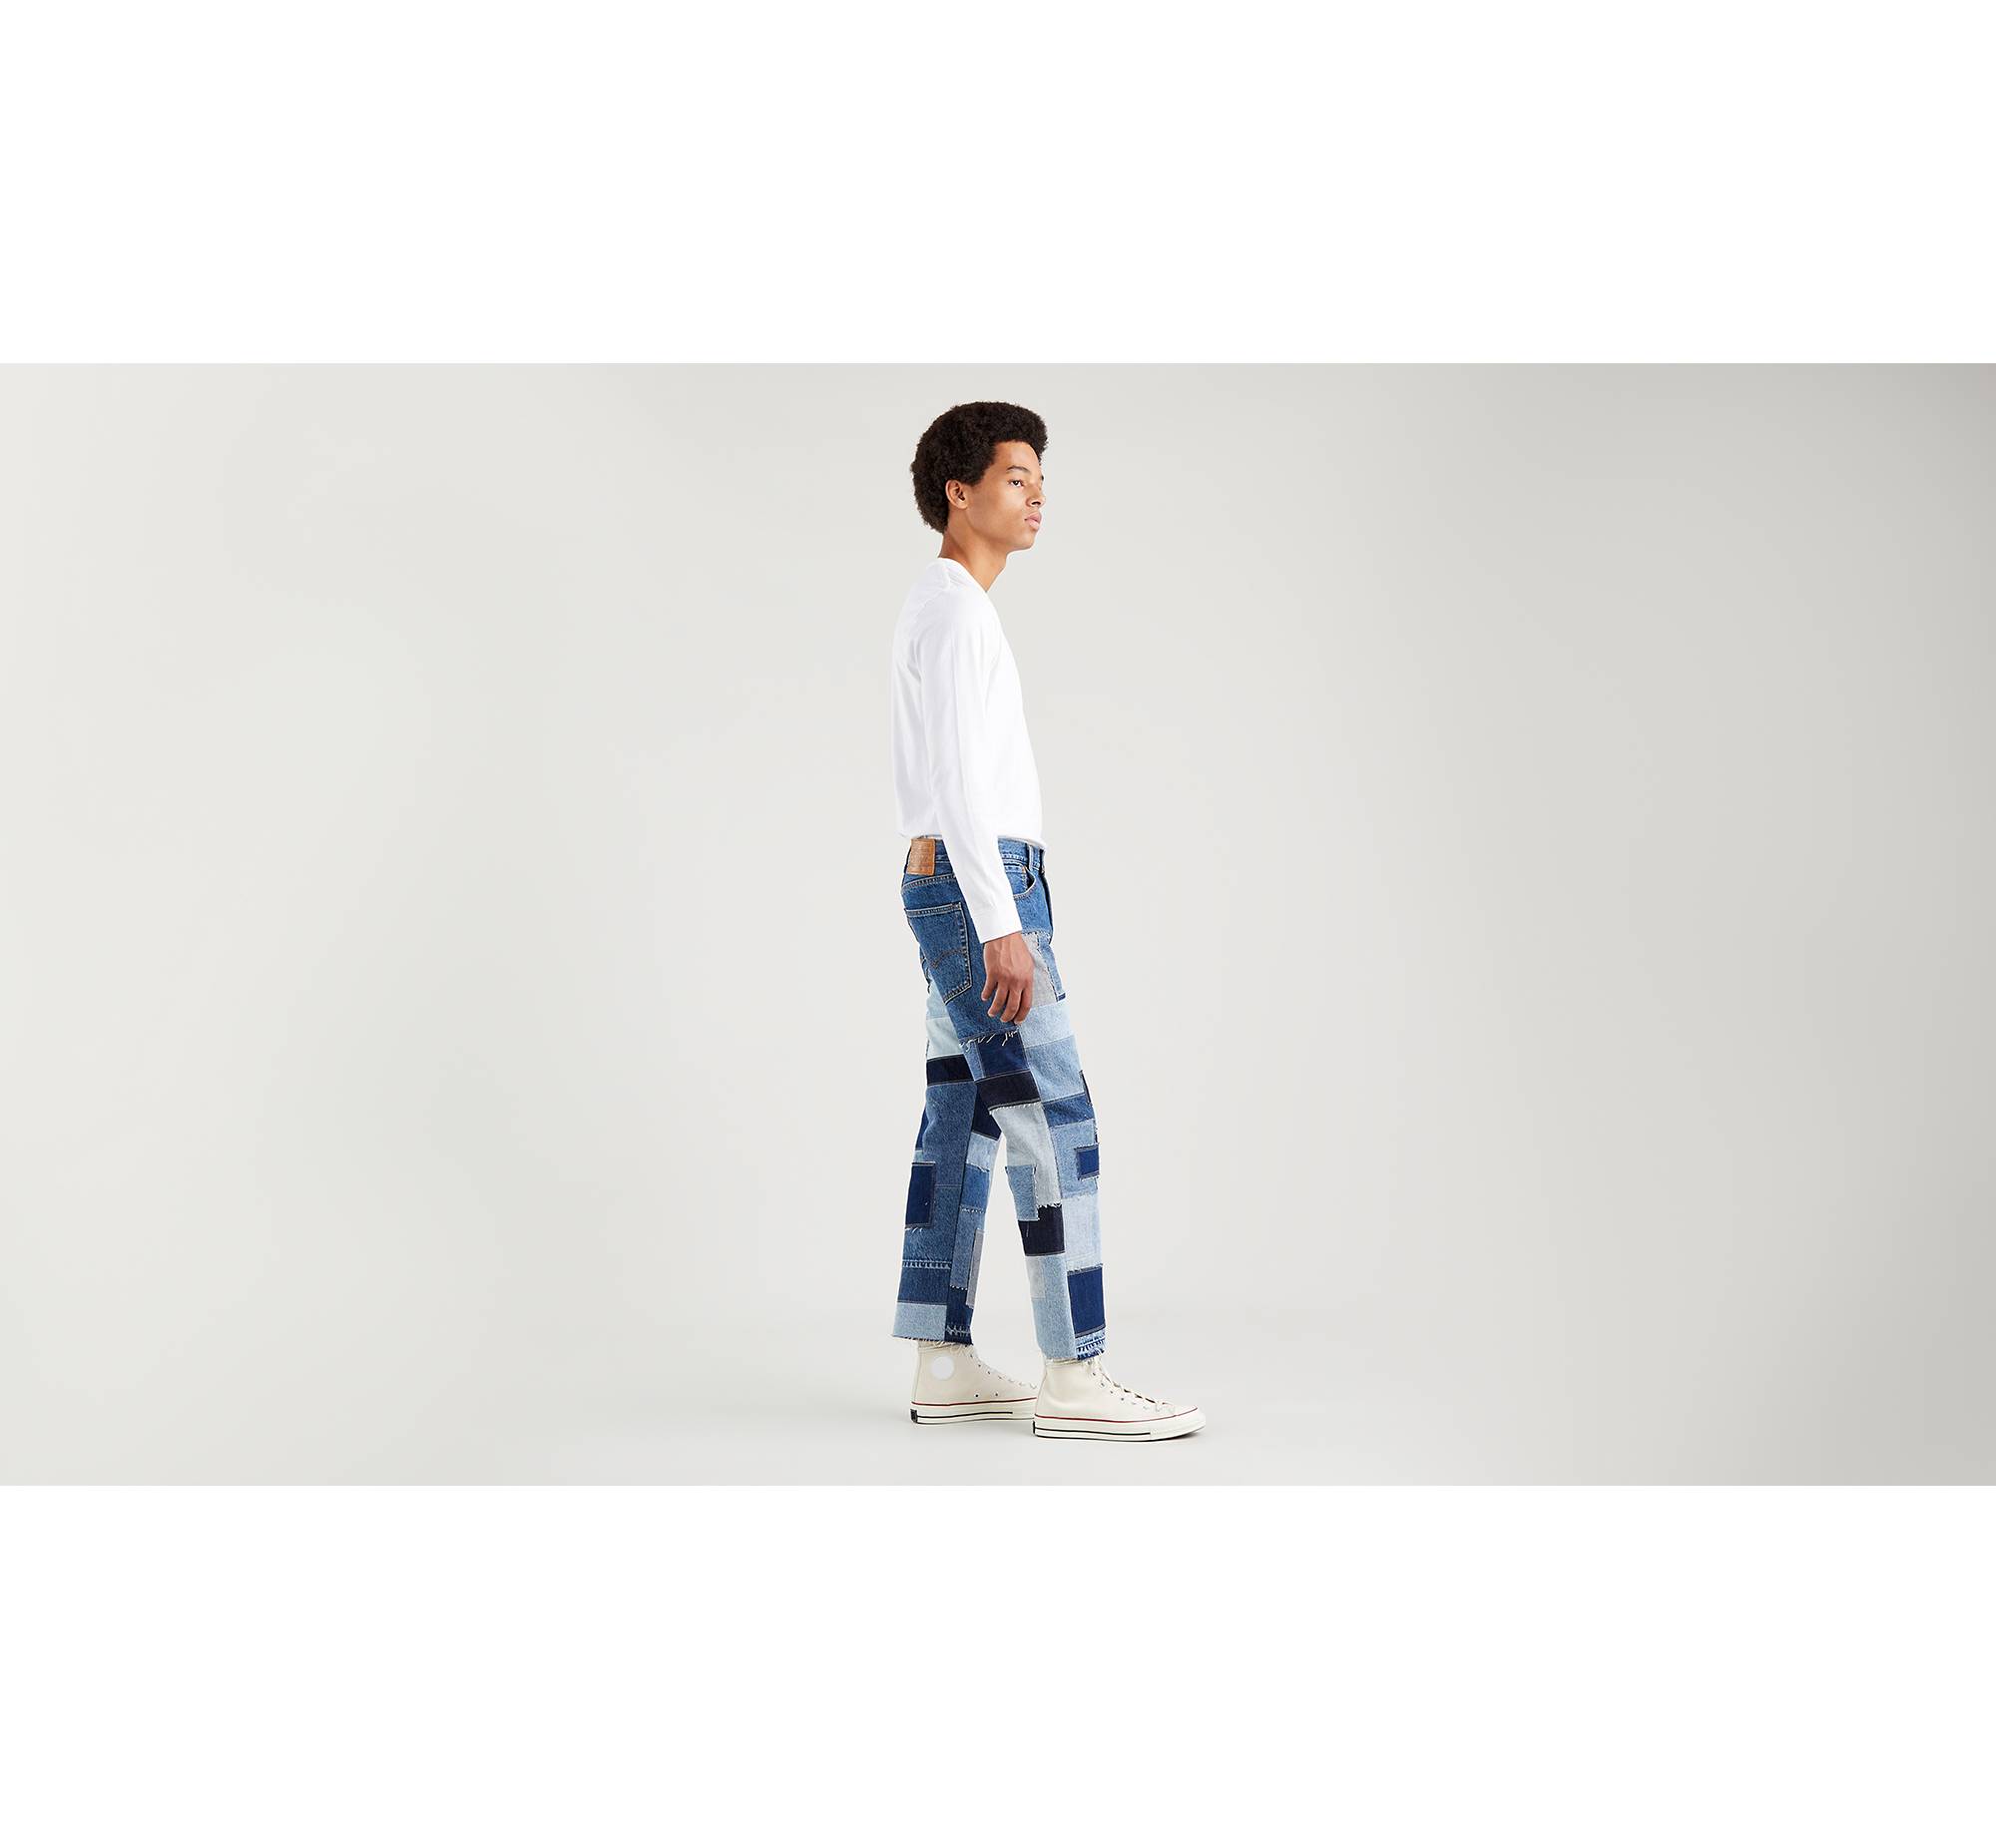 551z™ Authentic Straight Crop Jeans - Blue